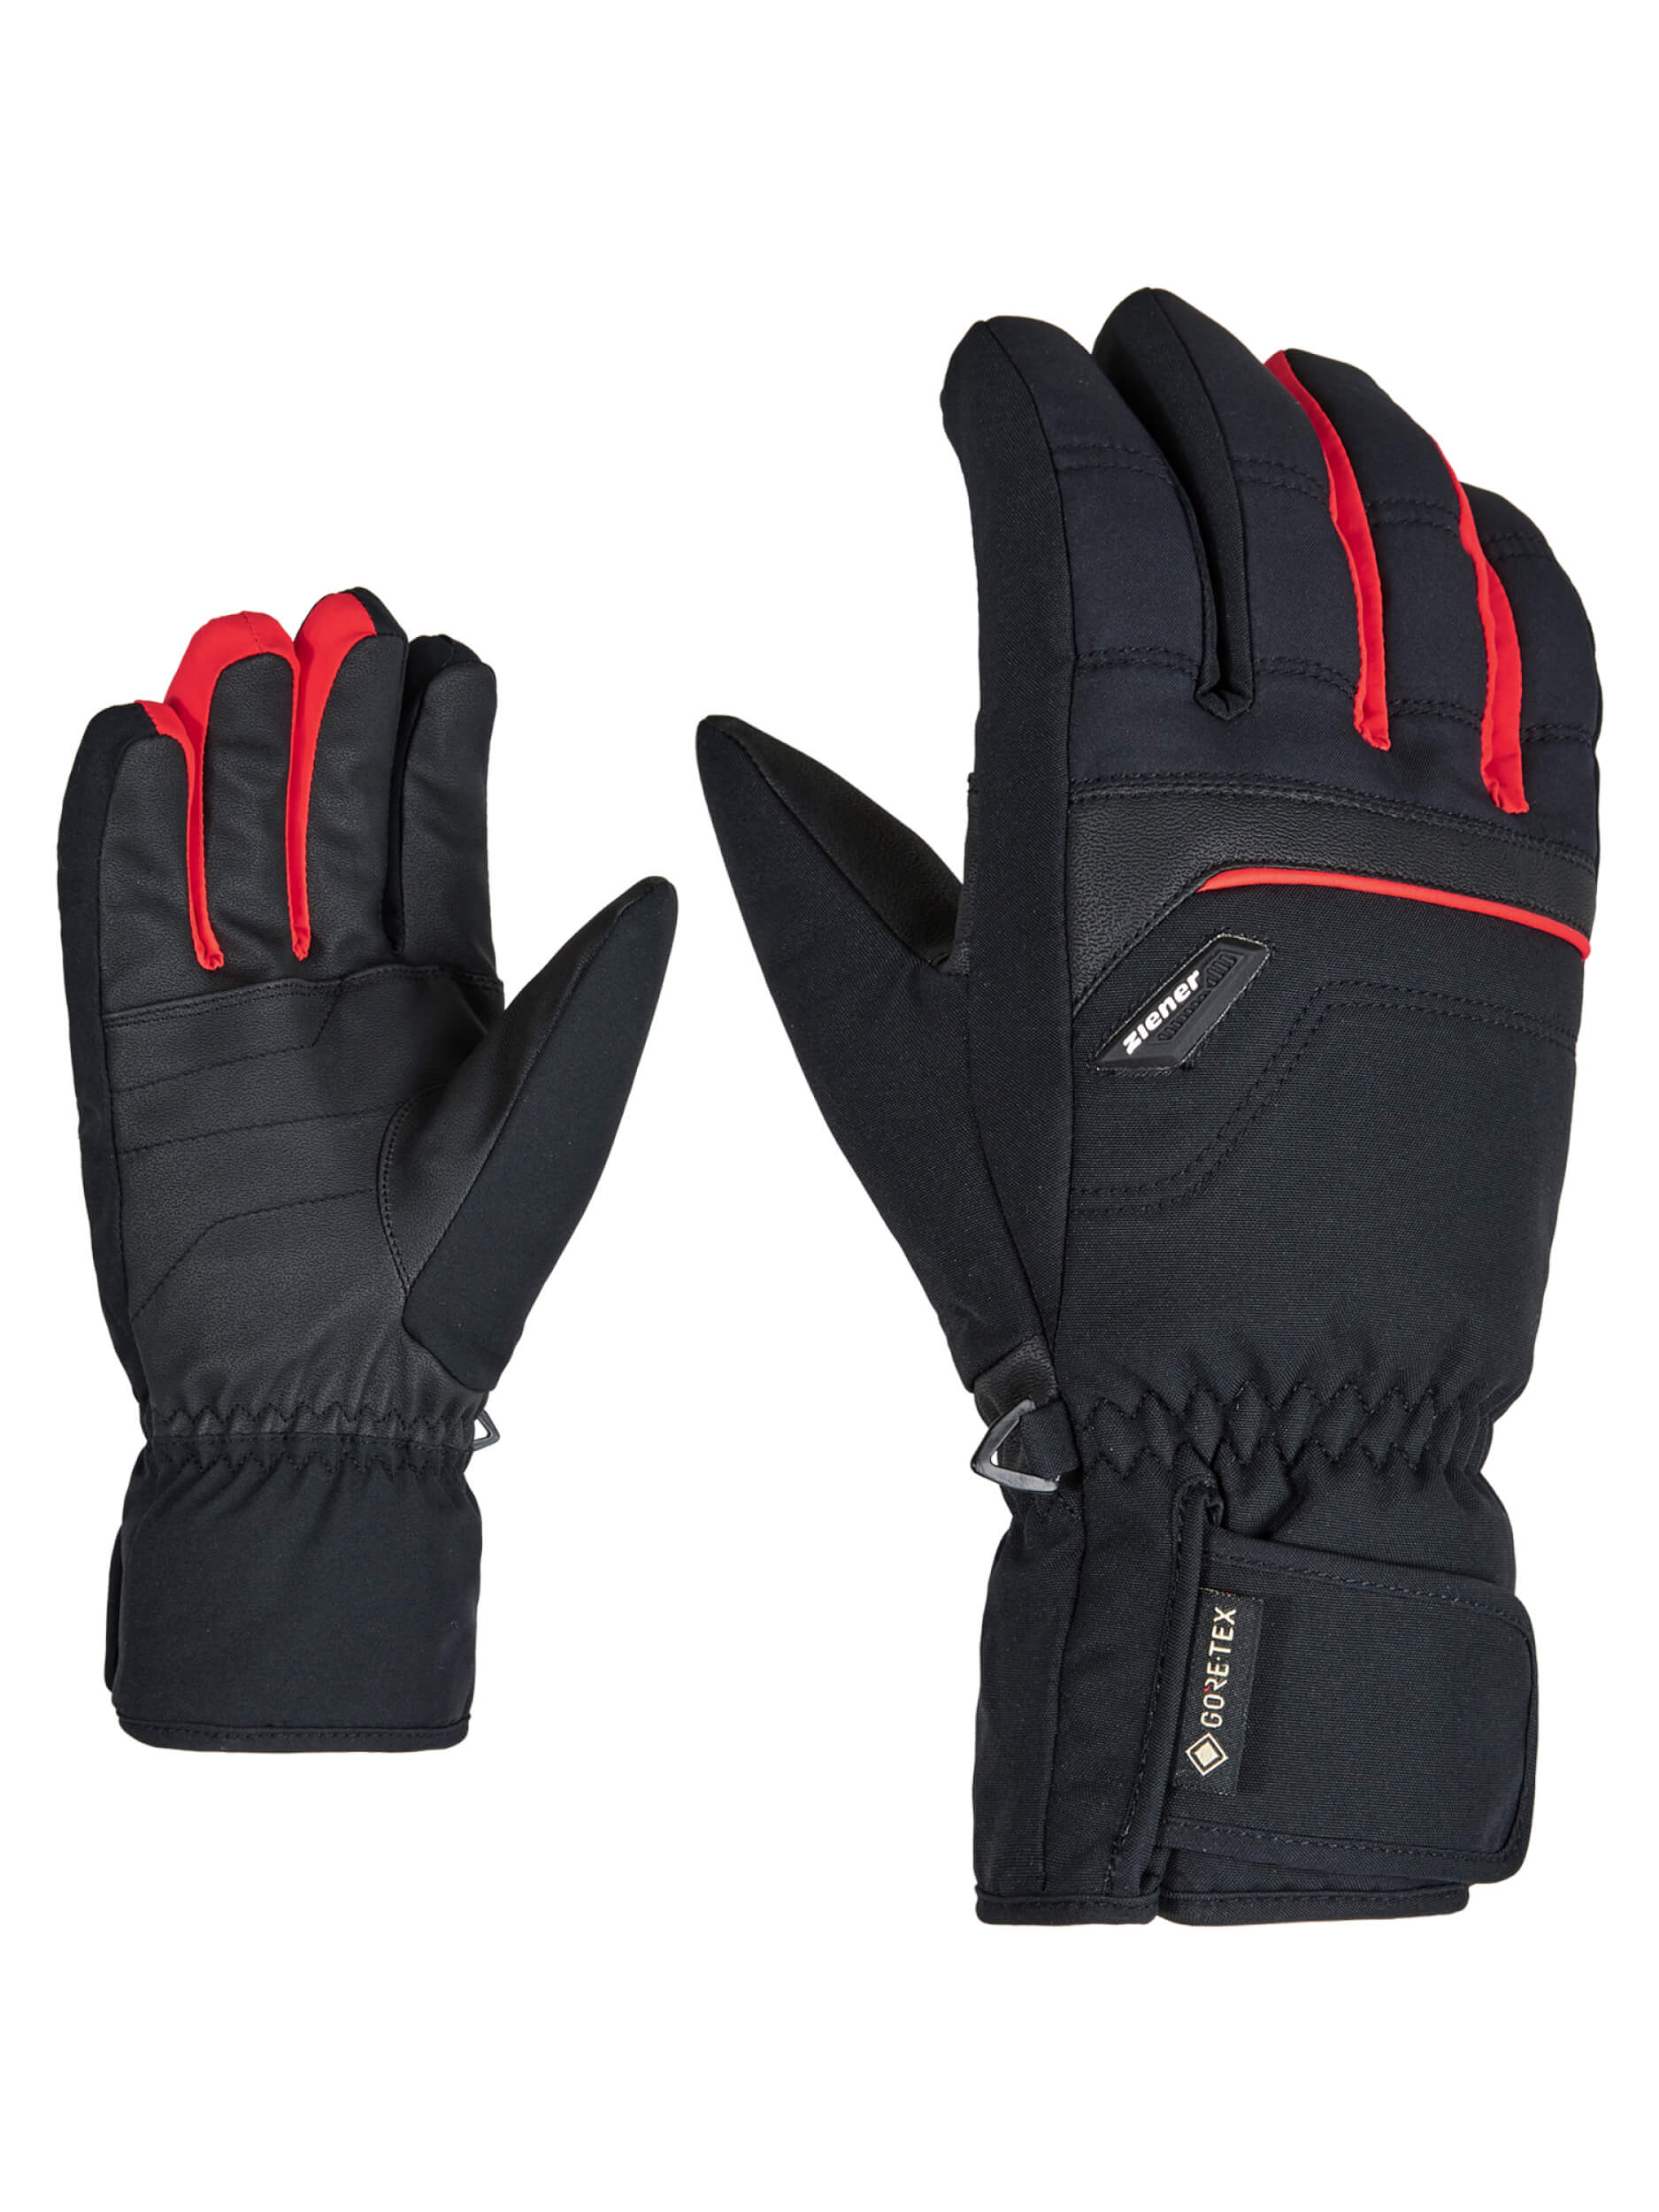 ZIENER Ski Handschuhe Glyn GORETEX schwarz rot 12888